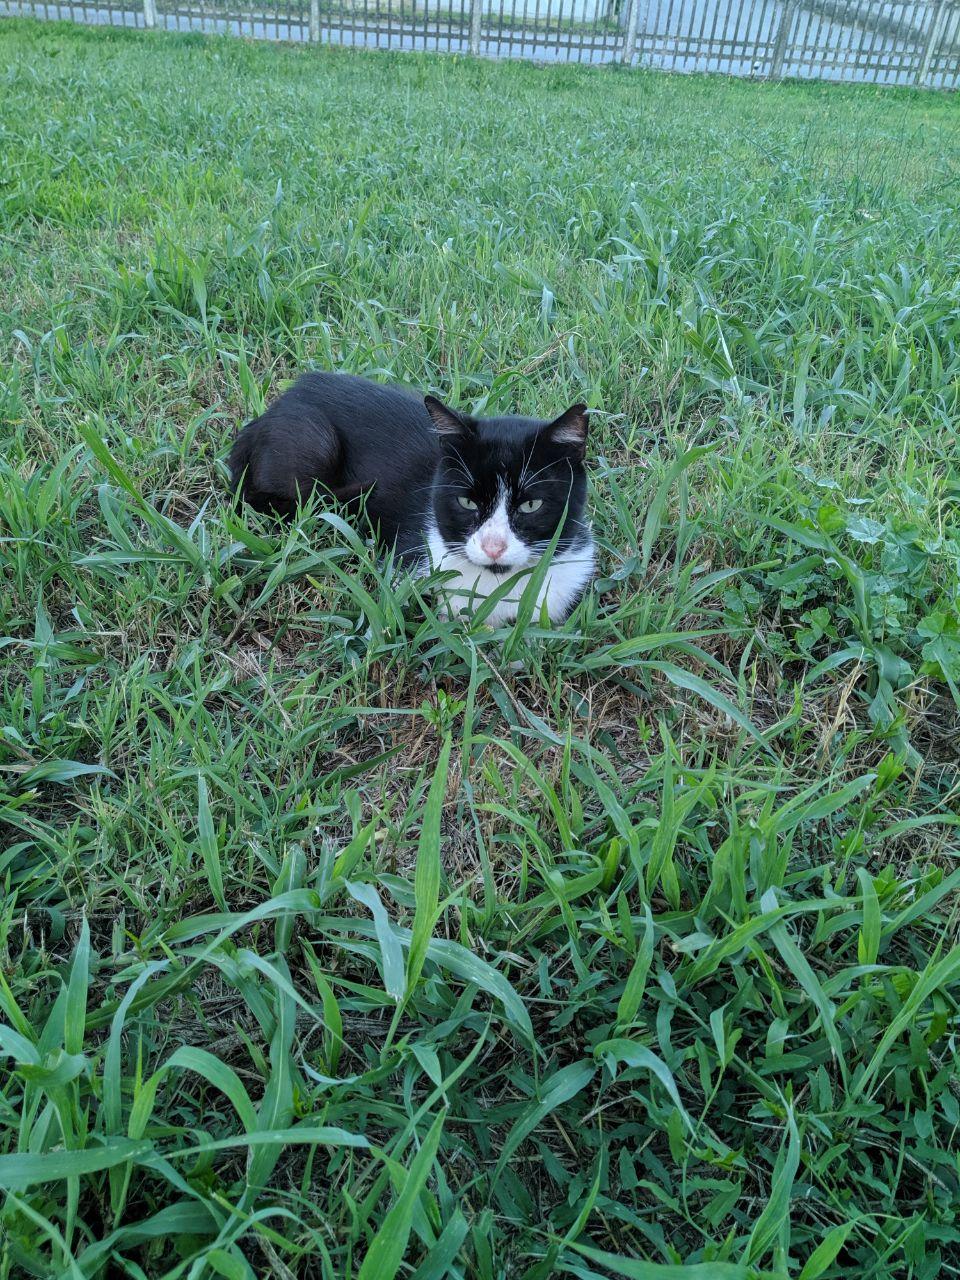 An injured male cat, Felonious, sitting on grass